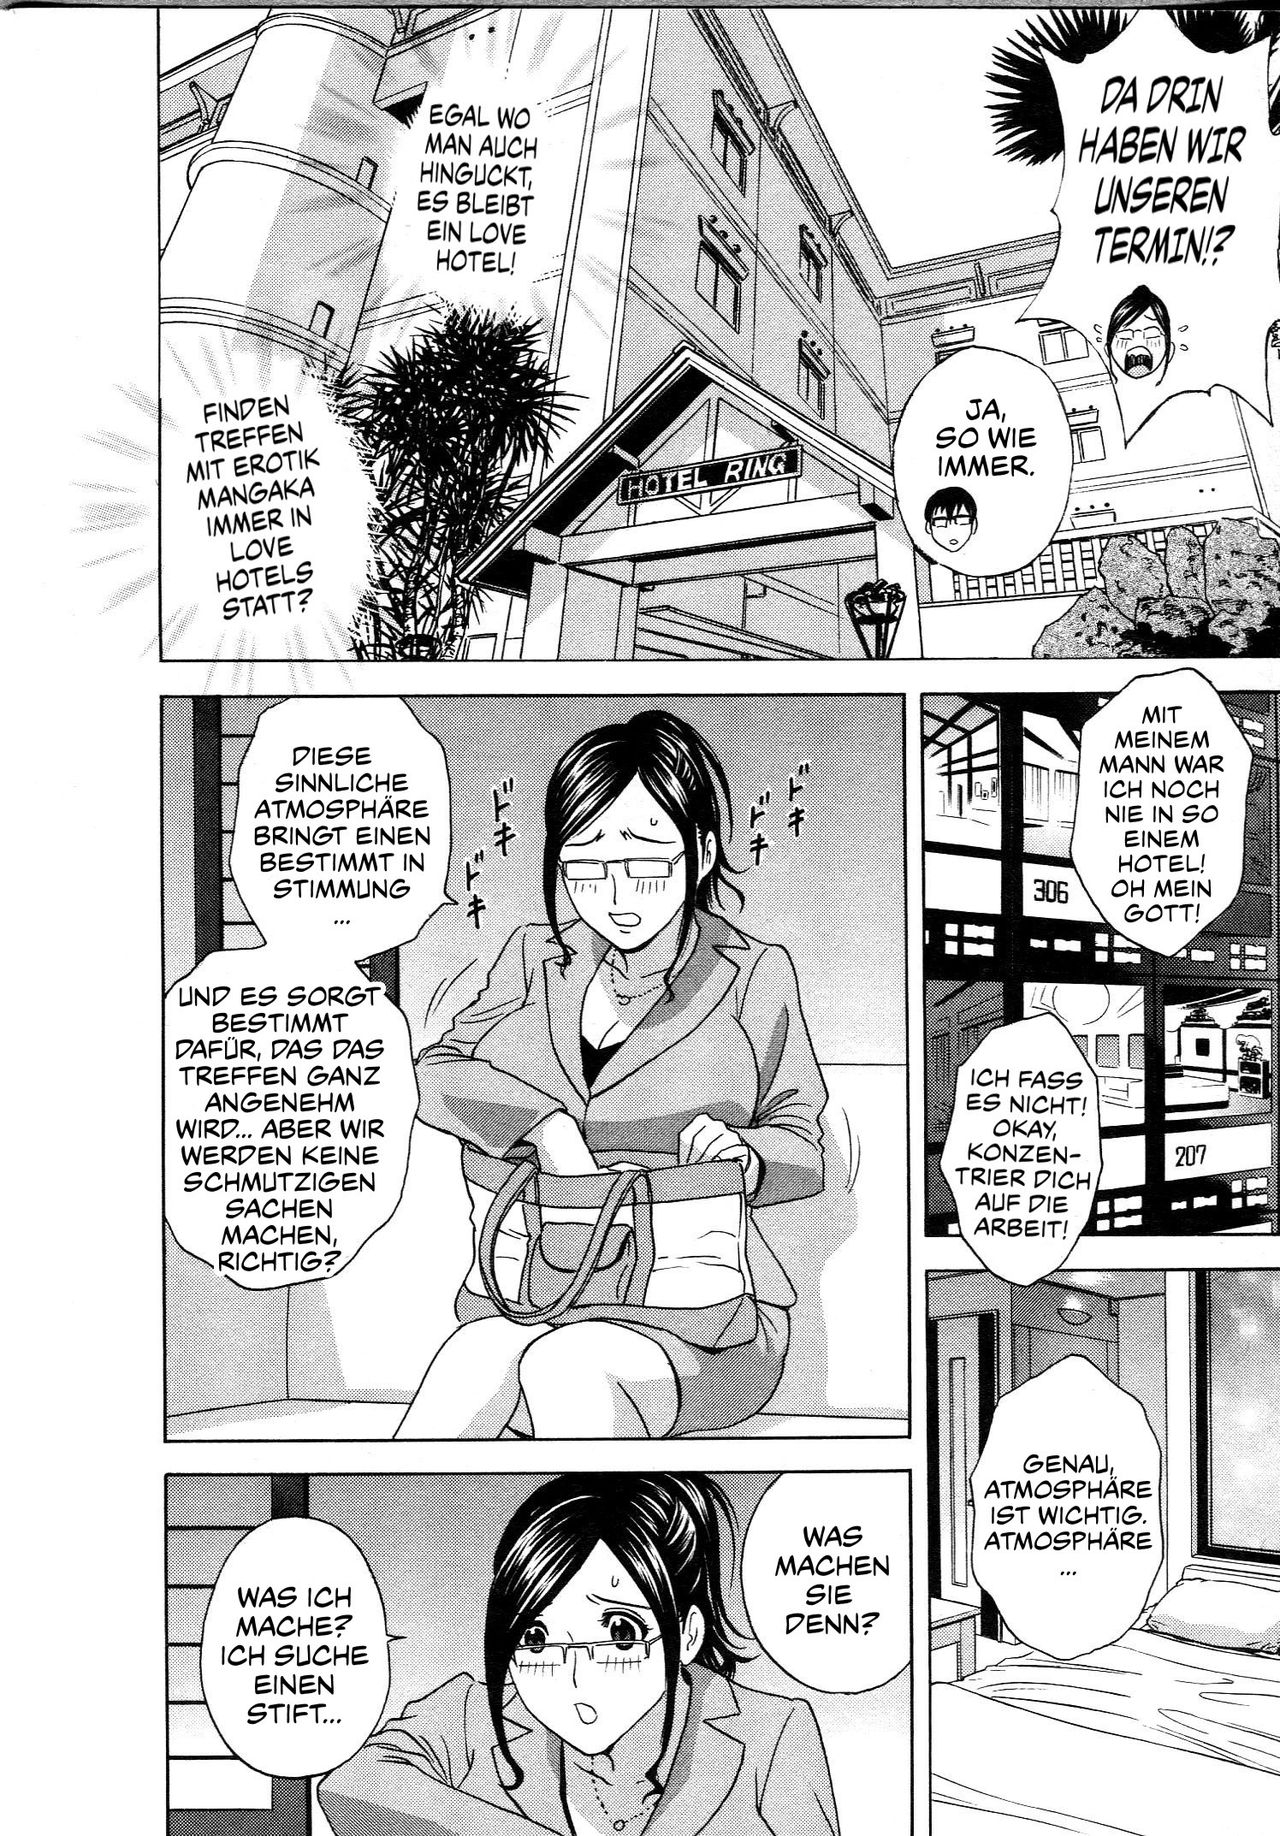 [Hidemaru] Eroina Hitoduma - Manga no youna Hitozuma to no Hibi 2 | Life with Married Women Just Like a Manga 2 [German] [SchmidtSST] 13